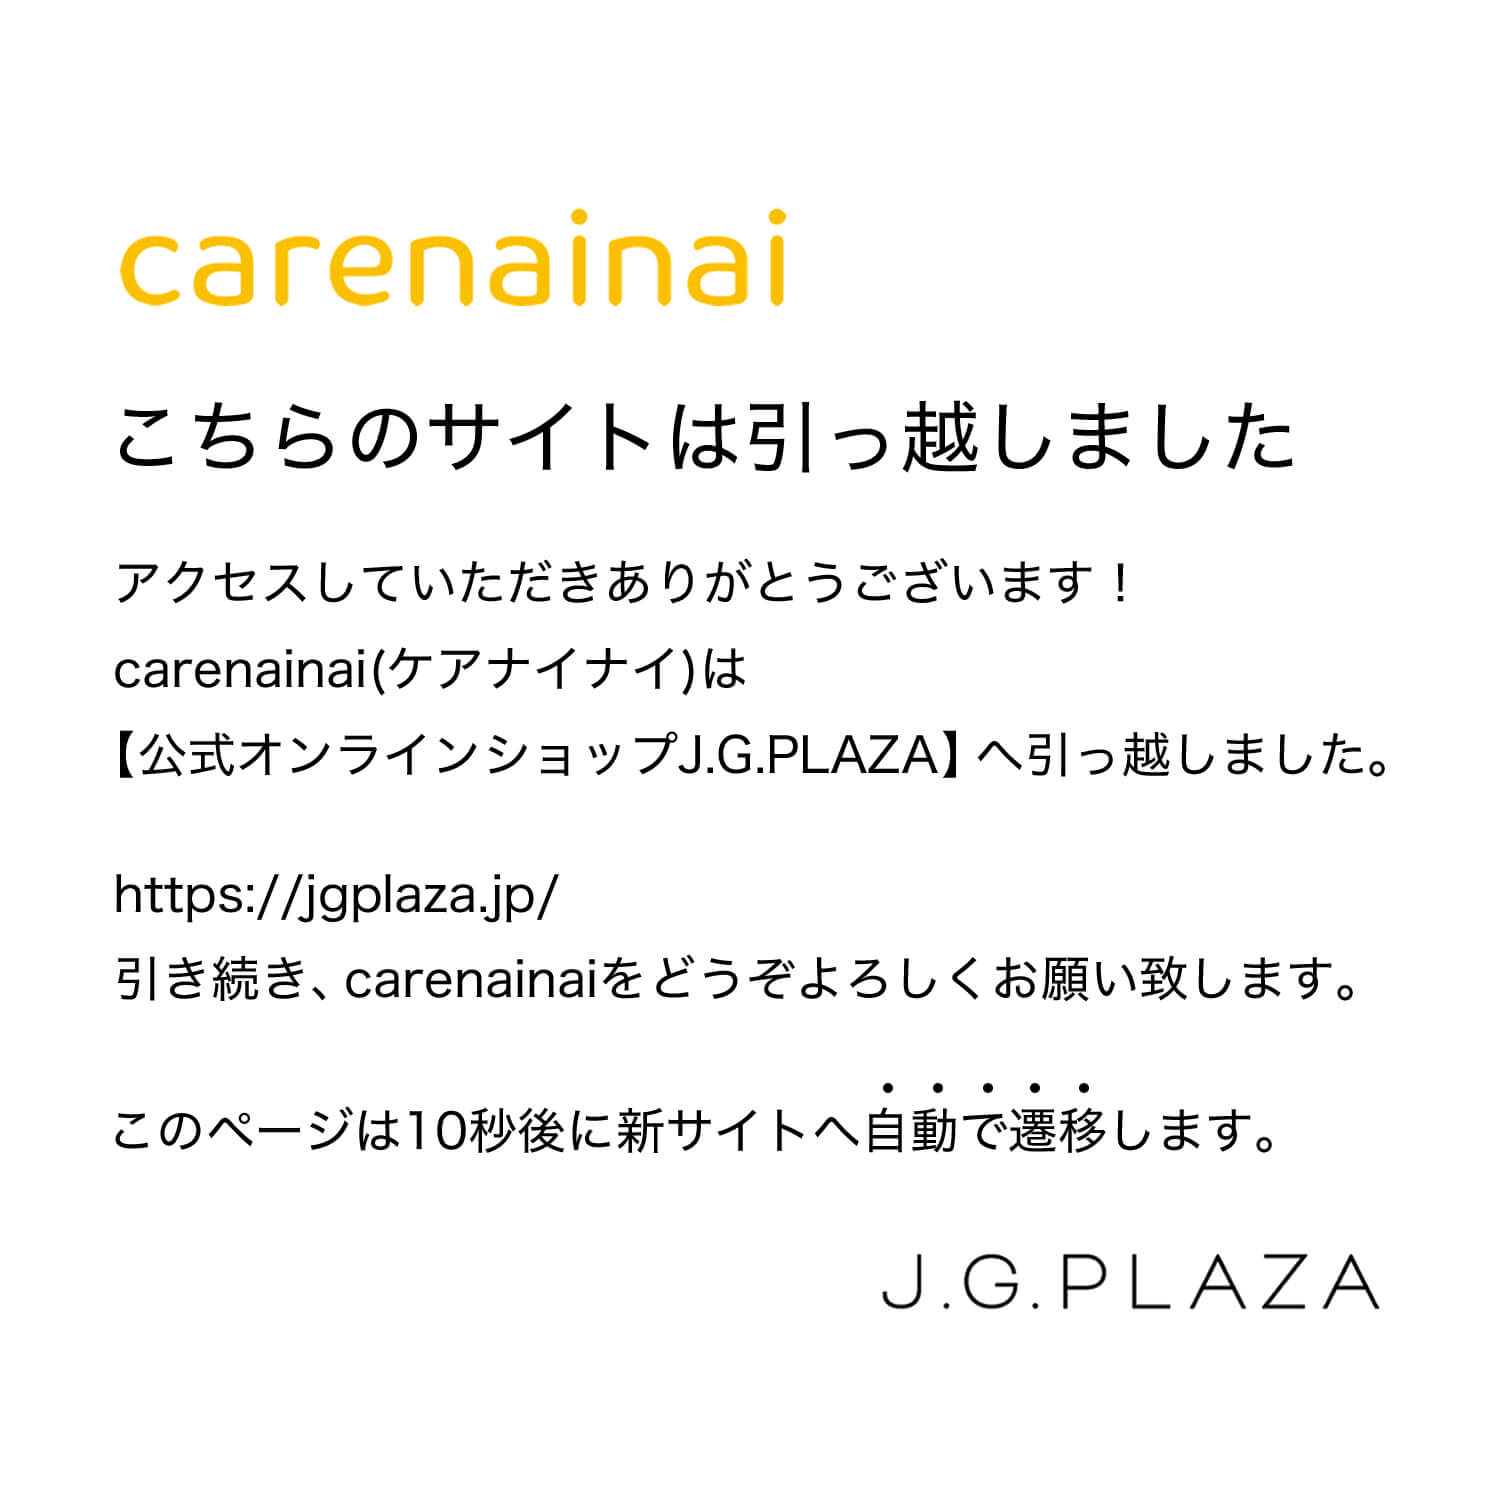 carenainai こちらのサイトは引っ越しました アクセスしていただきありがとうございます！carenainai(ケアナイナイ)は【公式オンラインショップJ.G.PLAZA】へ引っ越しました。https://jgplaza.jp/
引き続き、carenainaiをどうぞよろしくお願い致します。このページは10秒後に新サイトへ自動で遷移します。JGPLAZA